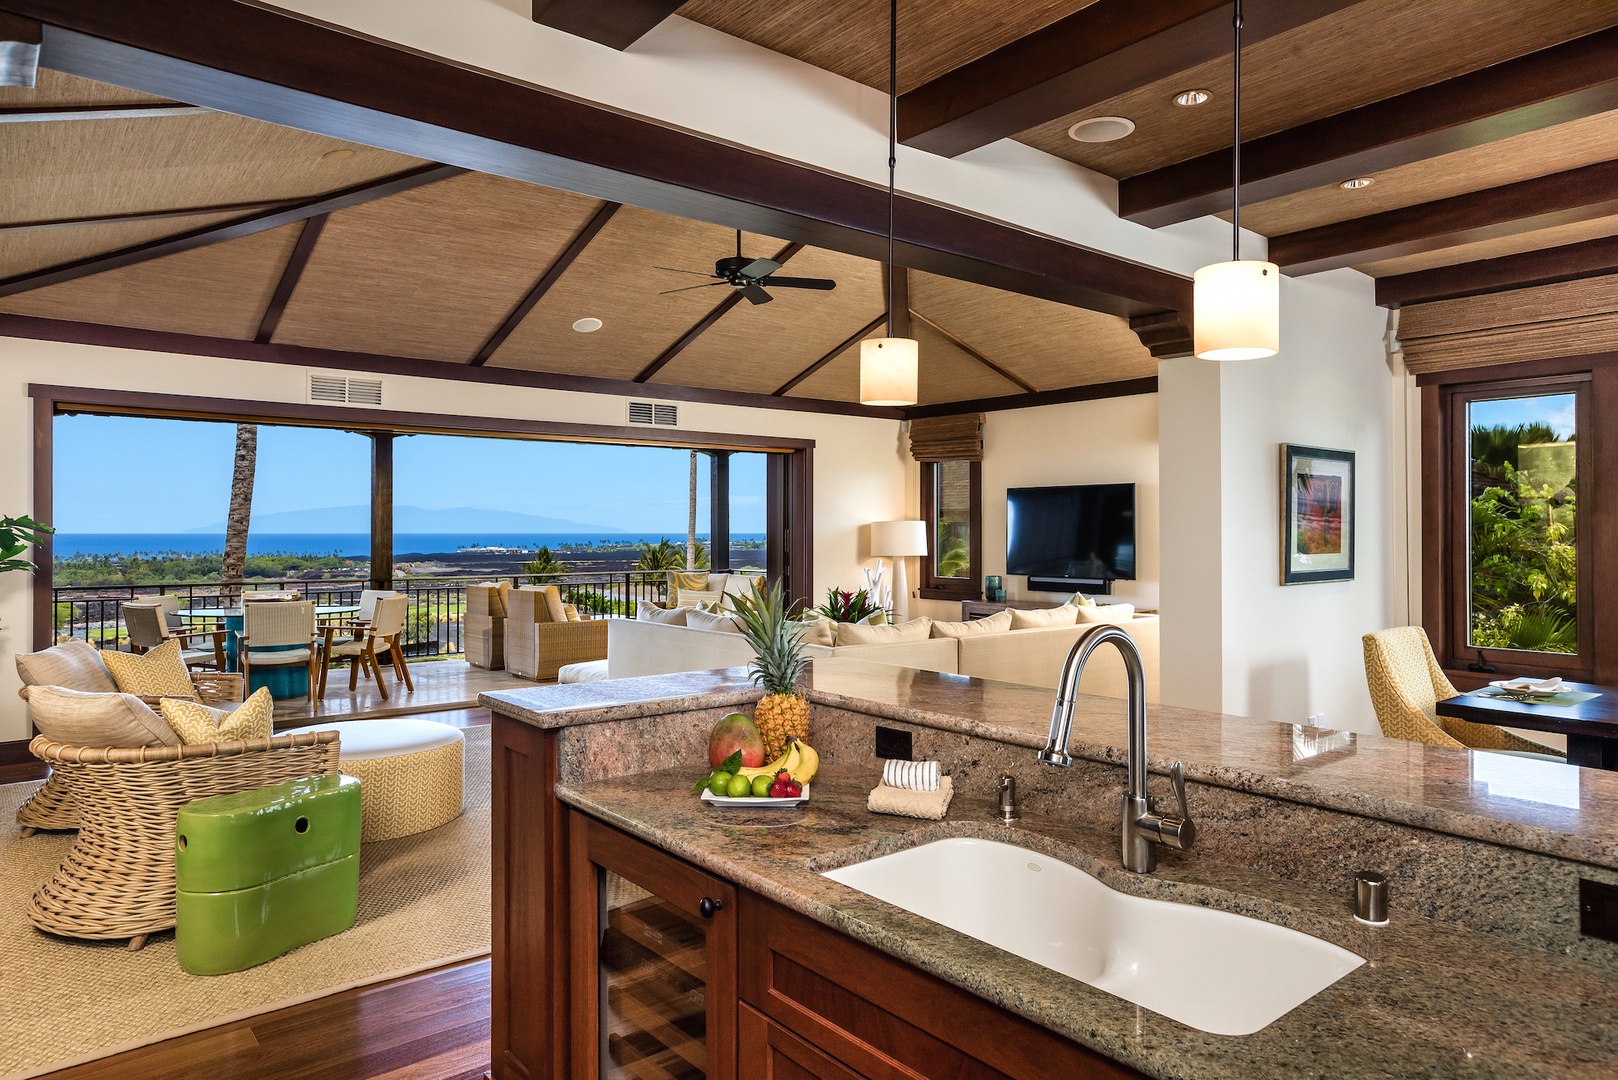 Kailua Kona Vacation Rentals, 3BD Hali'ipua Villa (108) at Four Seasons Resort at Hualalai - This modern kitchen is a chef's dream. Fully stocked with ocean views.